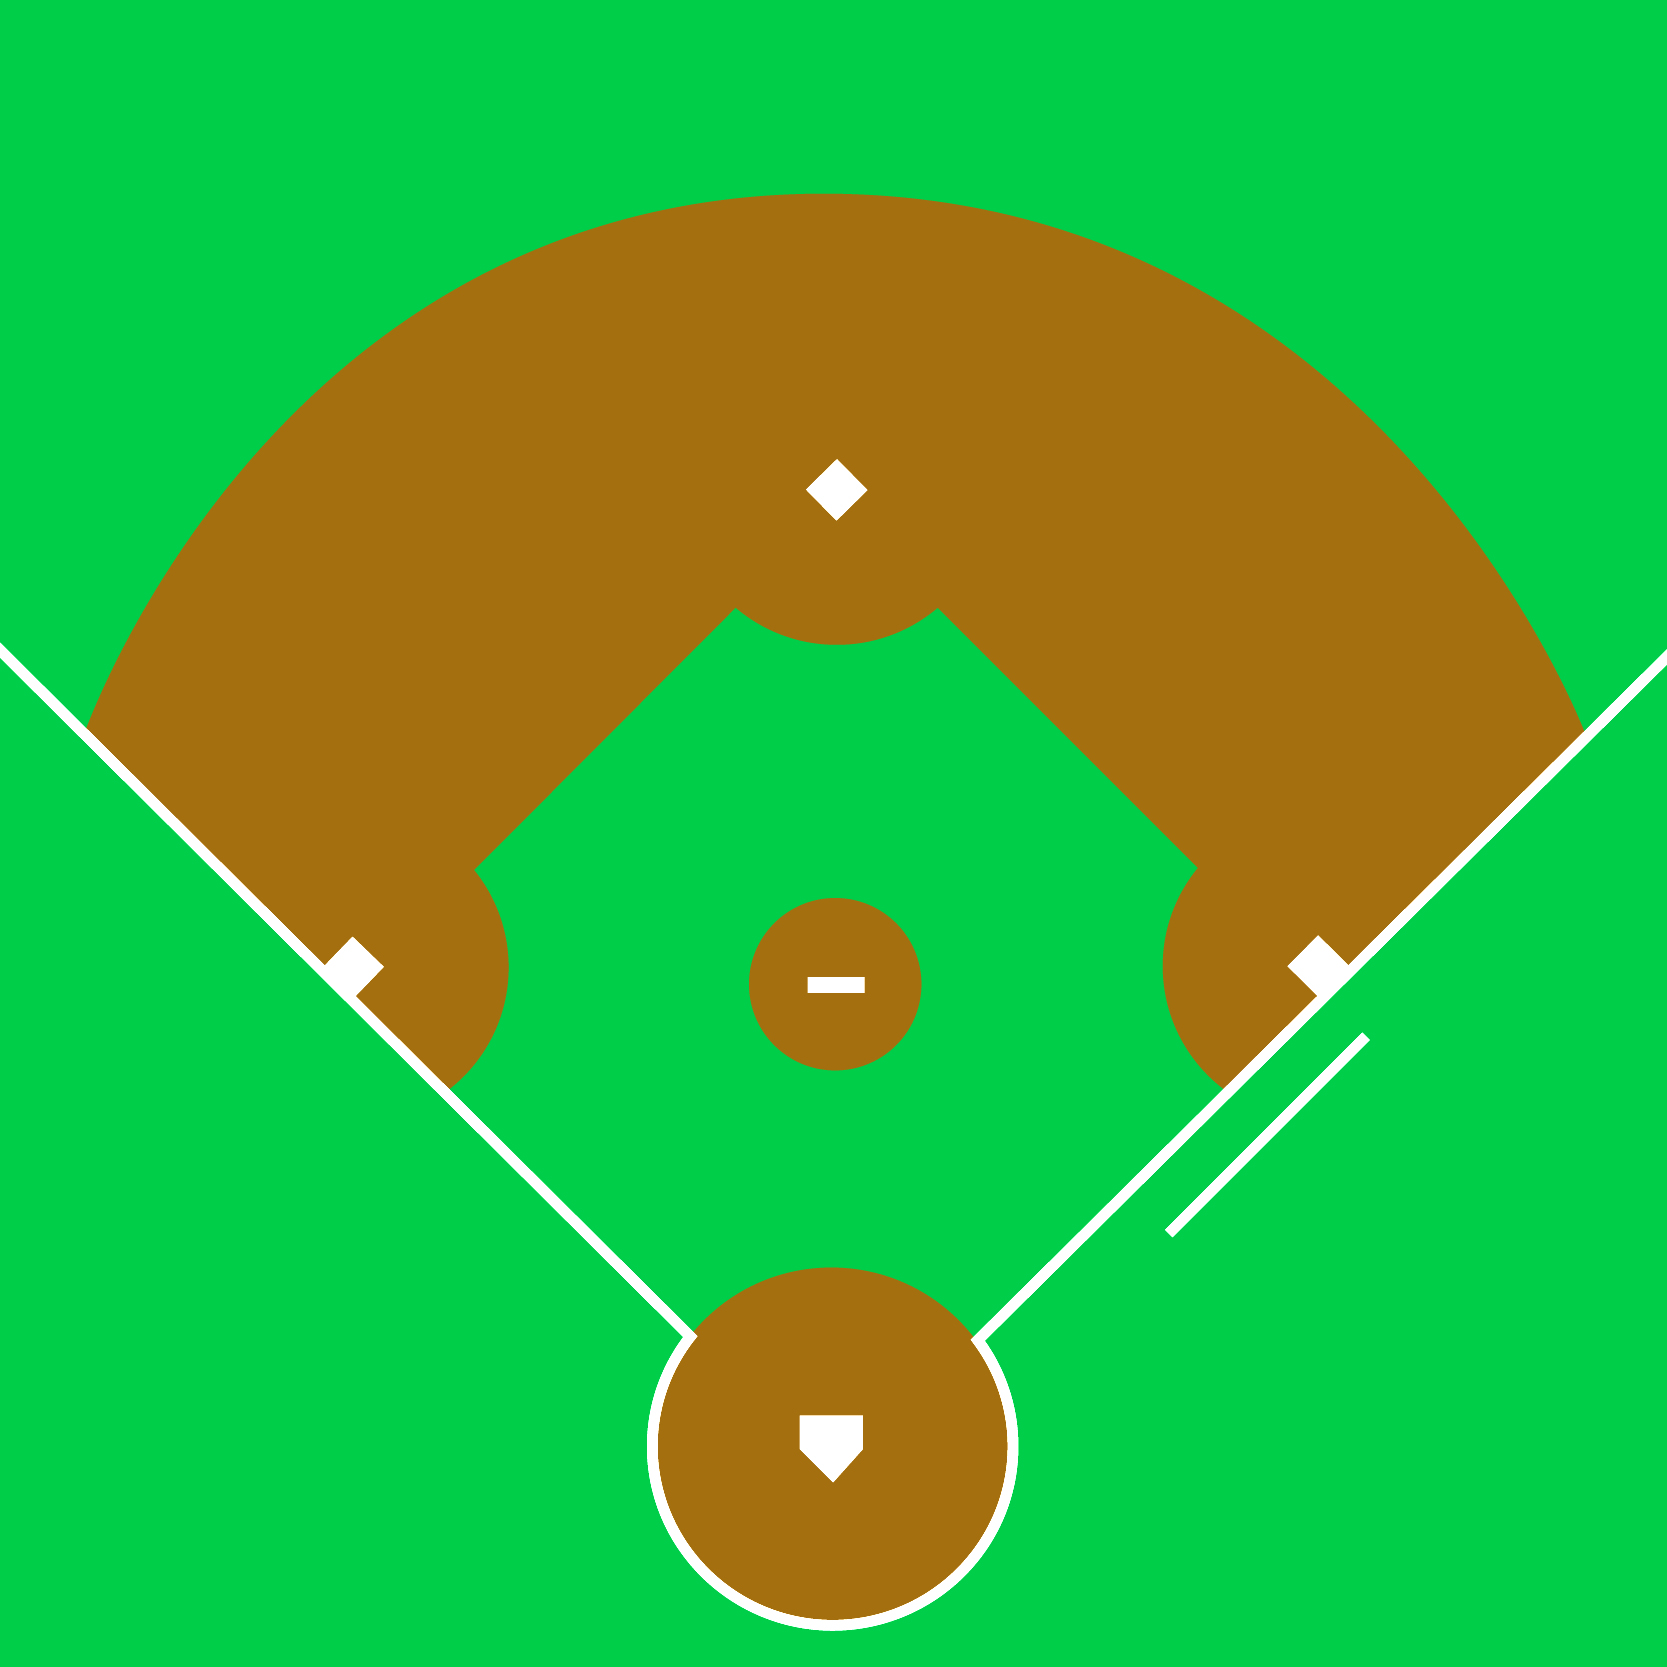 blank-baseball-field-diagram-cliparts-co